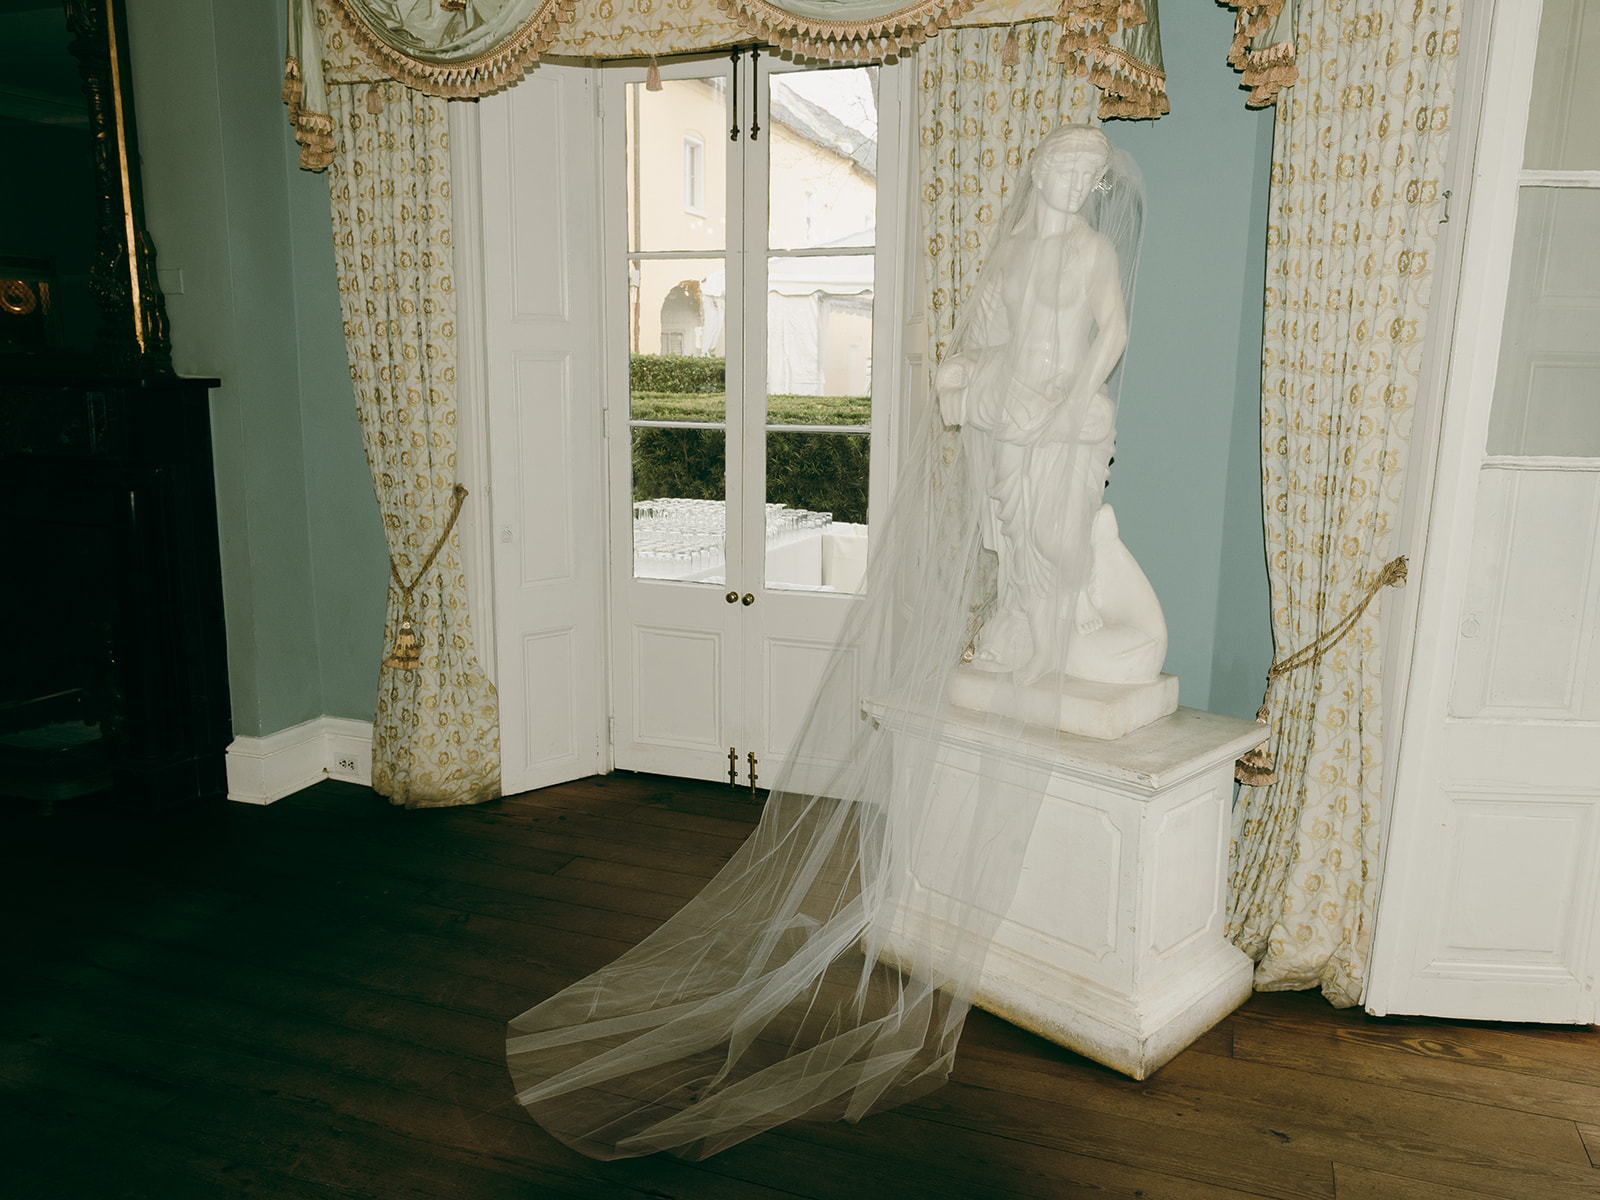 The bride's veil adorns a statue